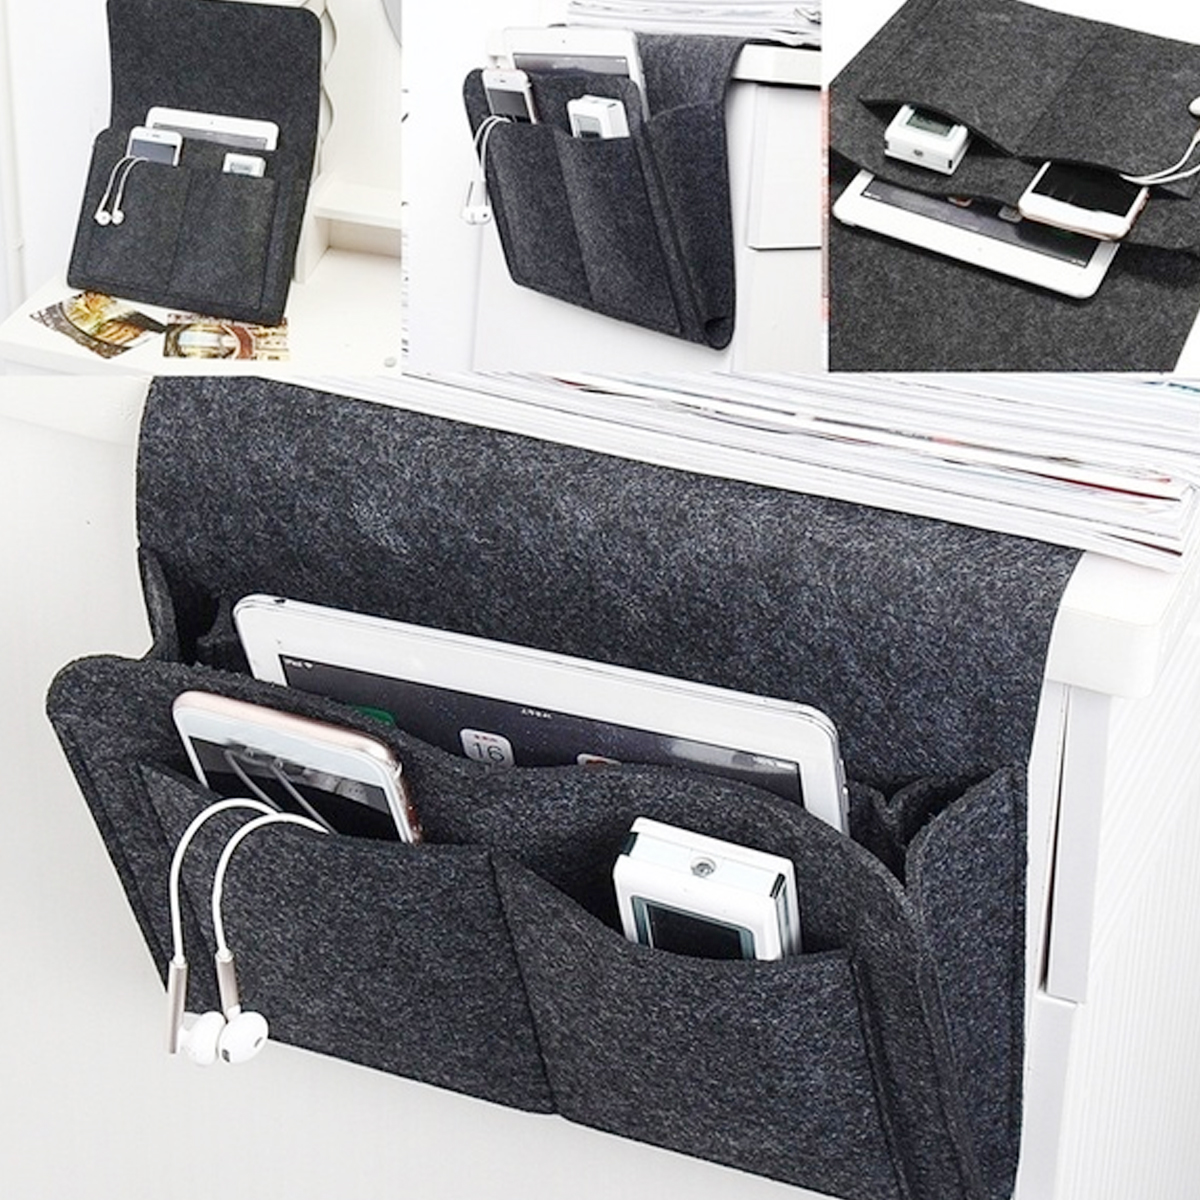 32x20x10cm-Felt-Bedside-Sofa-Storage-Bag-Remote-Book-Phone-Hanging-Parts-Storage-Box-1590370-1